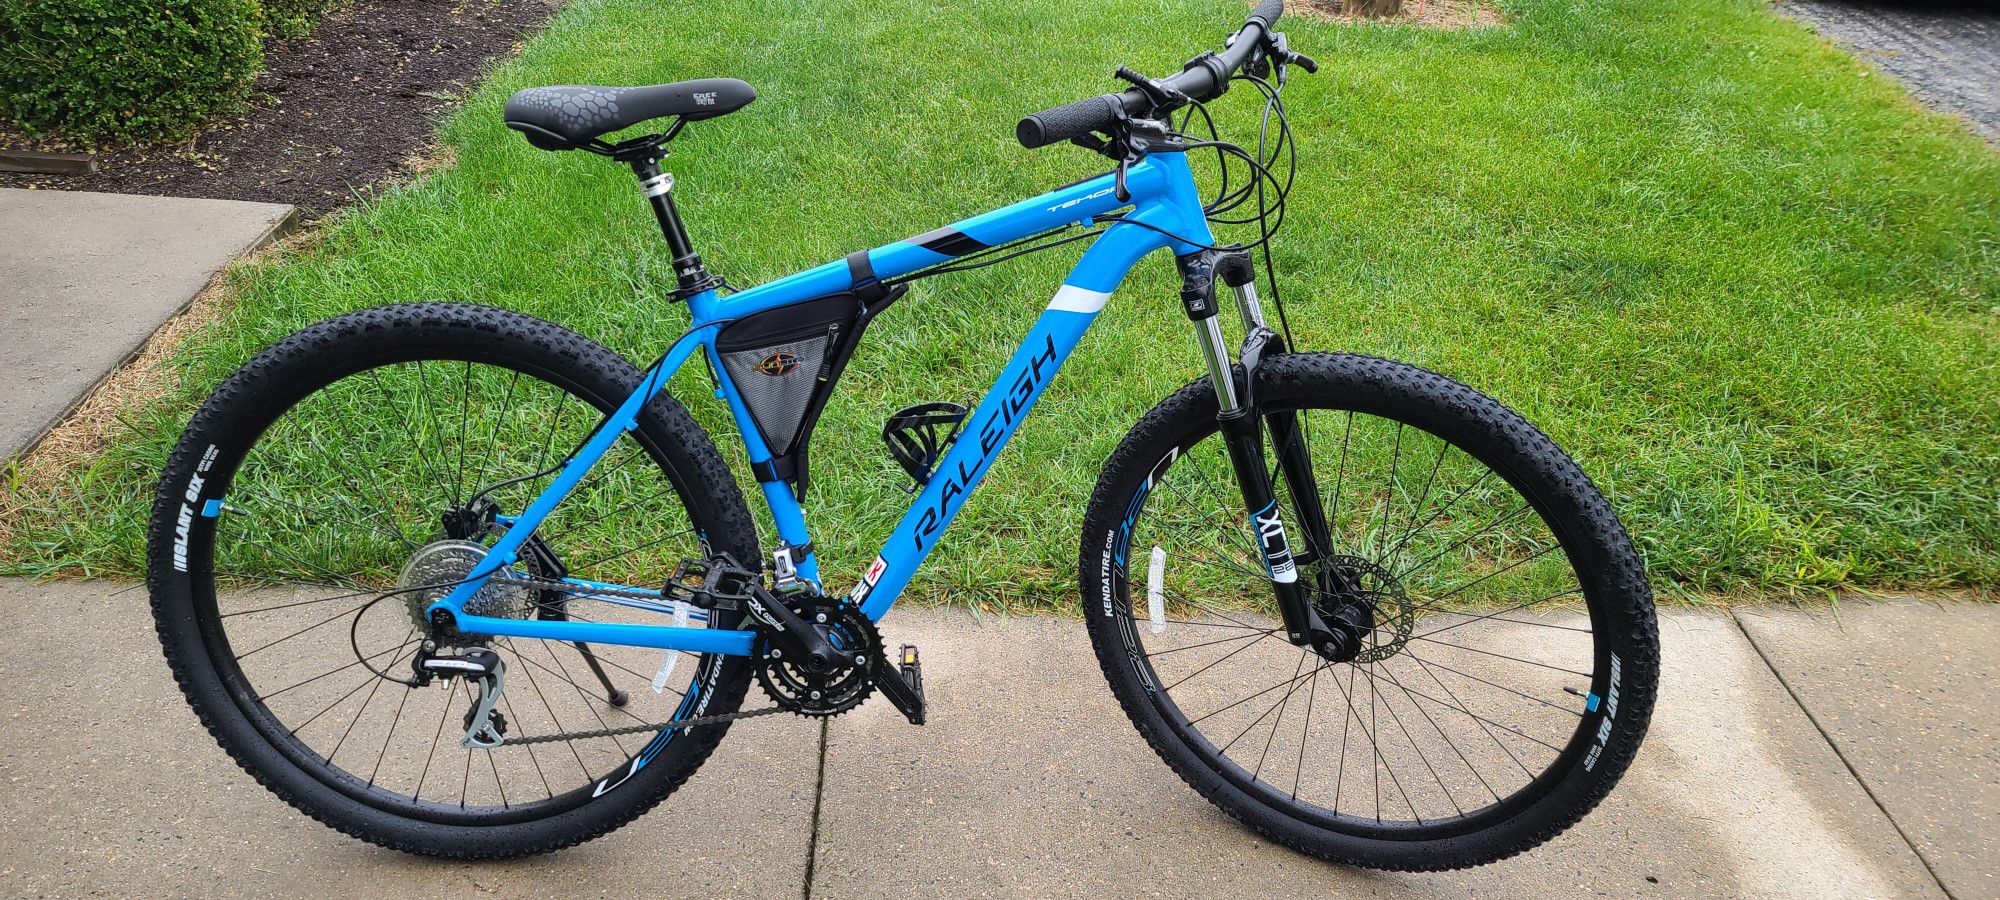 2018 Raleigh Tekoa Mountain Bike size Large